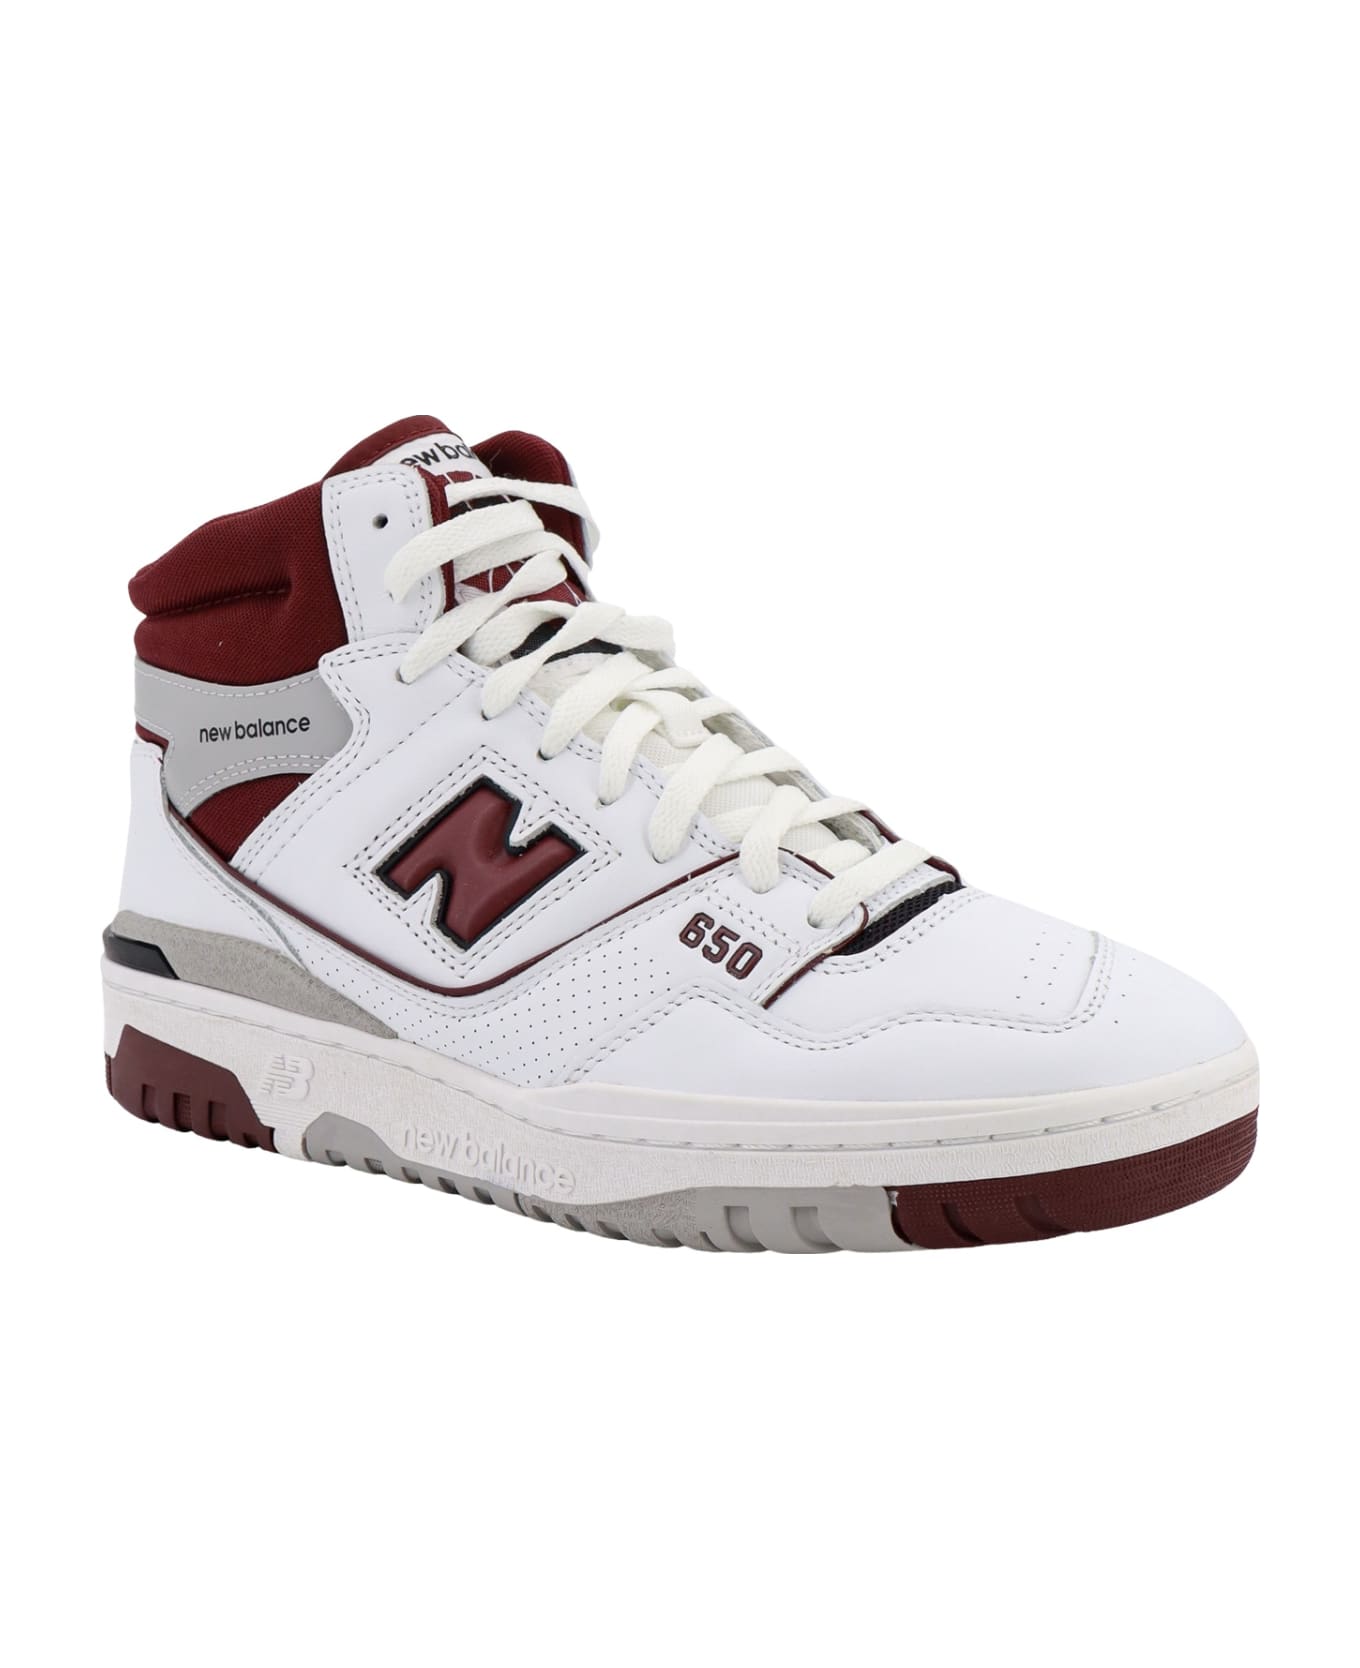 New Balance 650 Sneakers - White スニーカー